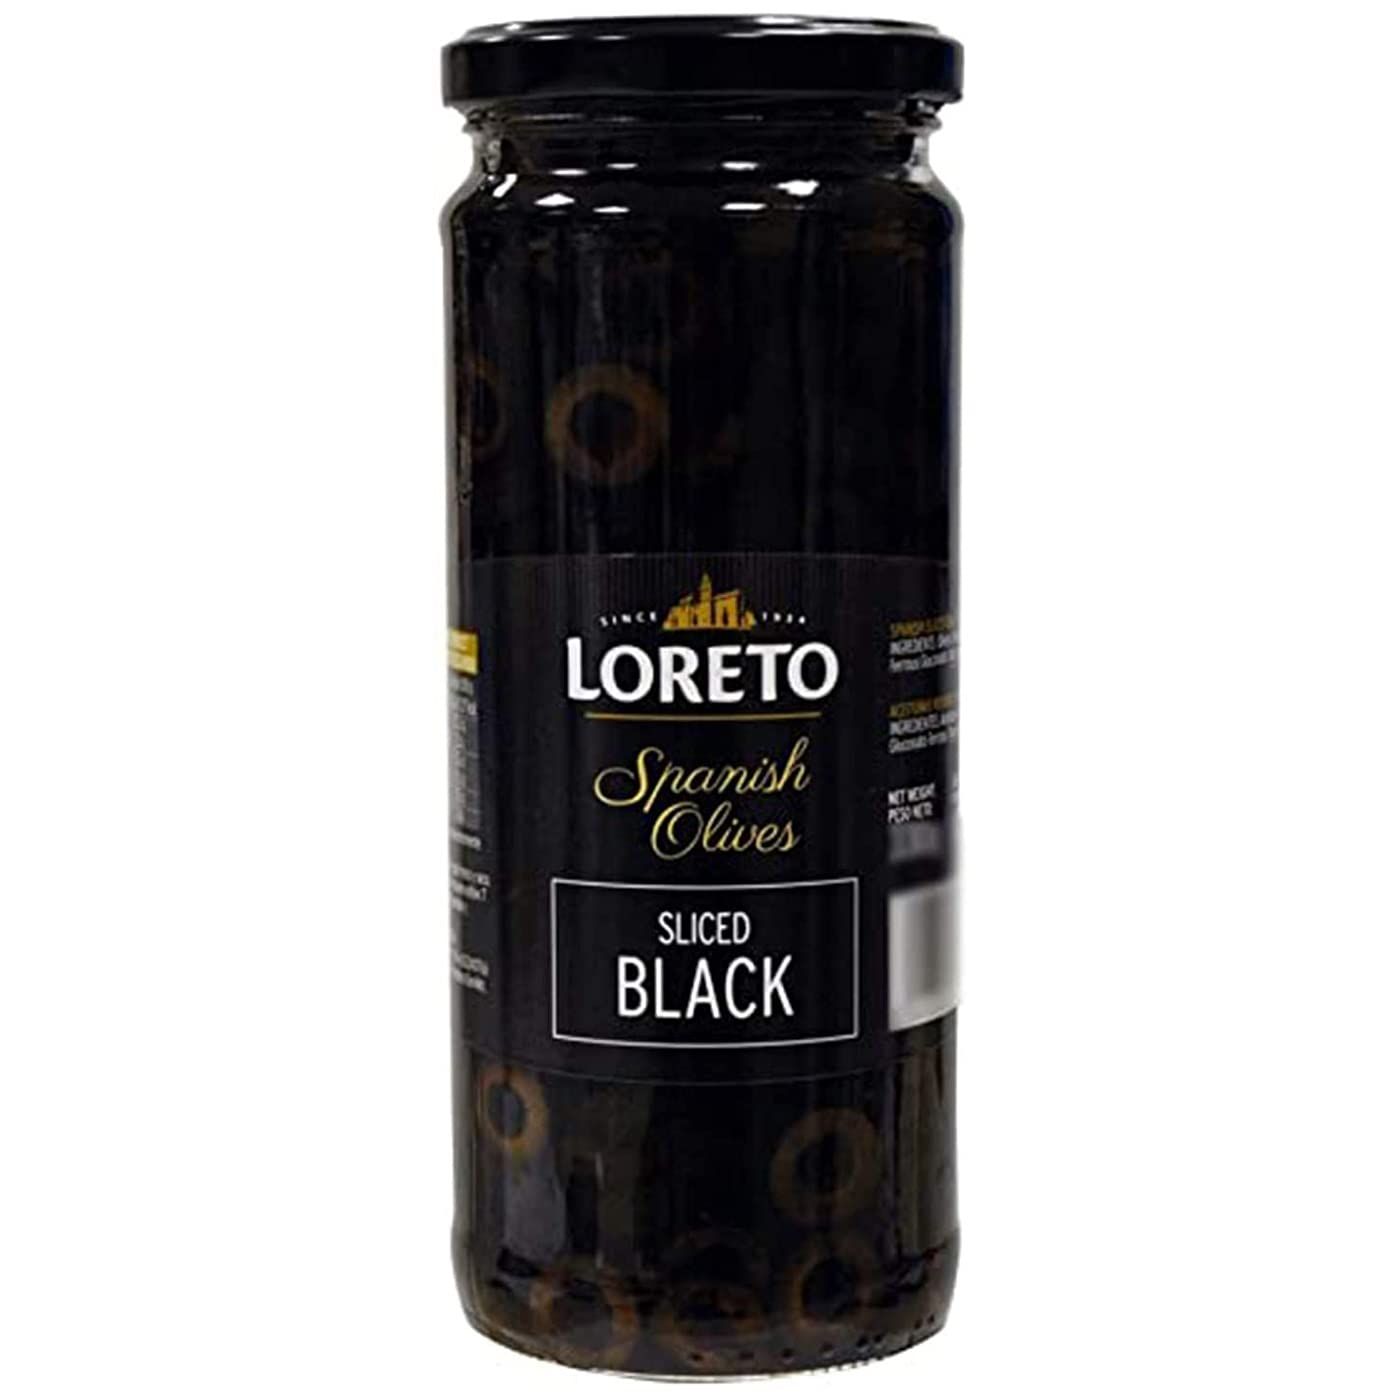 Loreto Sliced Black Olives Image